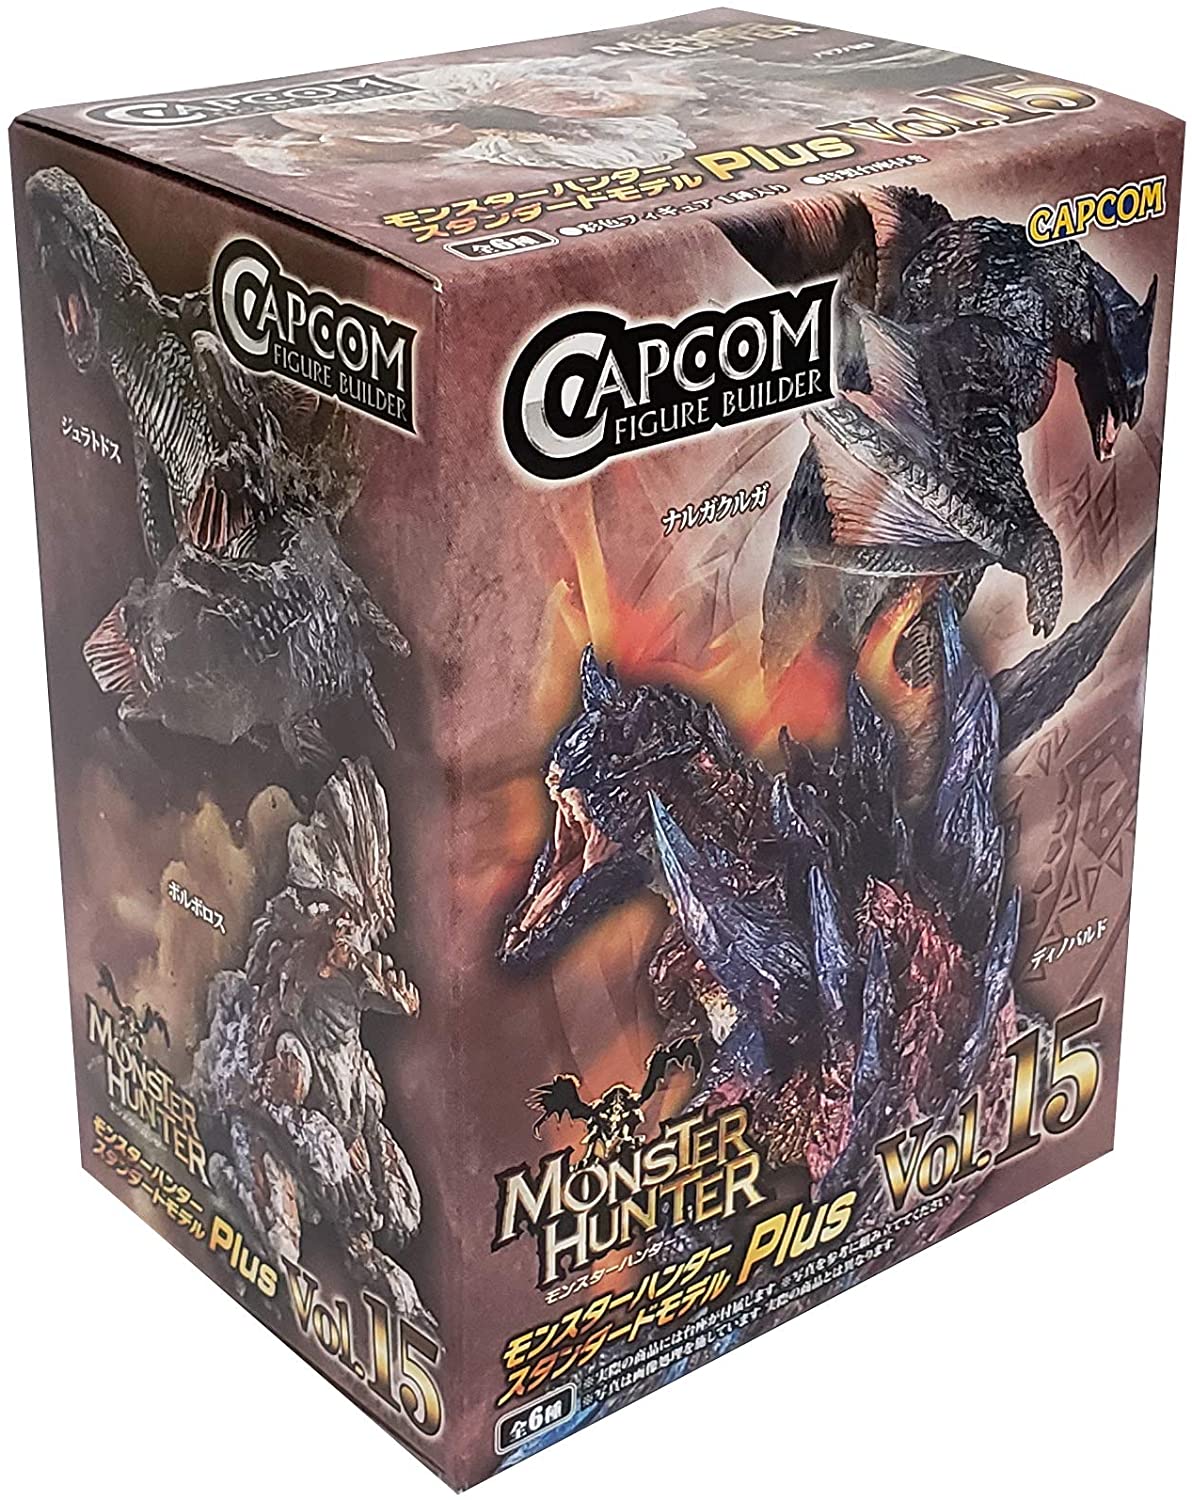 Capcom CFB Monster Hunter Plus Figure Builder Random Blind Box Vol 15